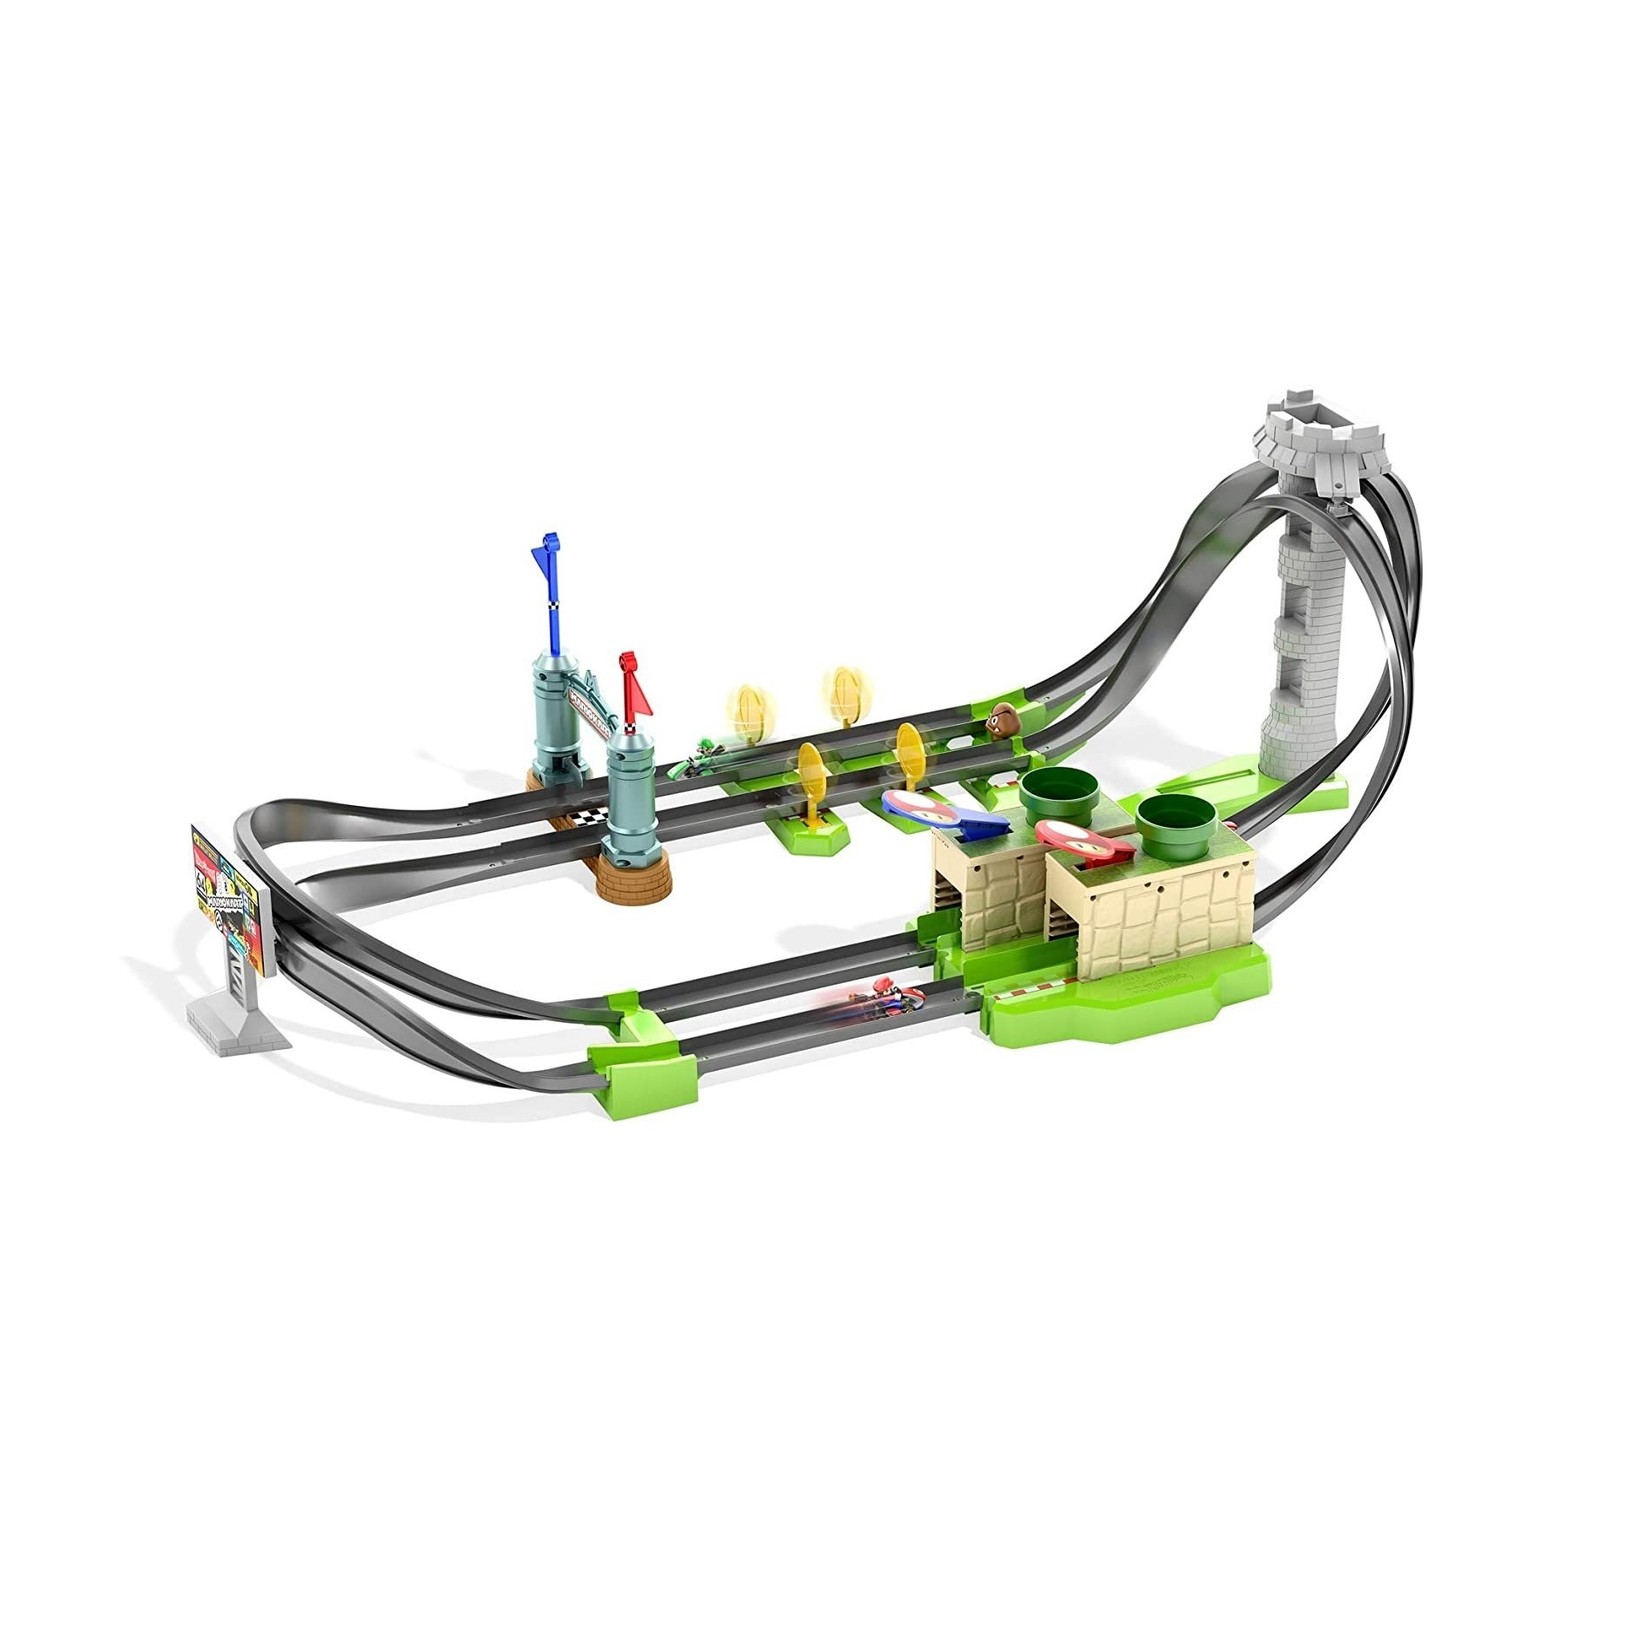 Mattel Games Hot Wheels - Mario Kart Circuit Lite Track Set  ( Ramassage en magasin seulement )